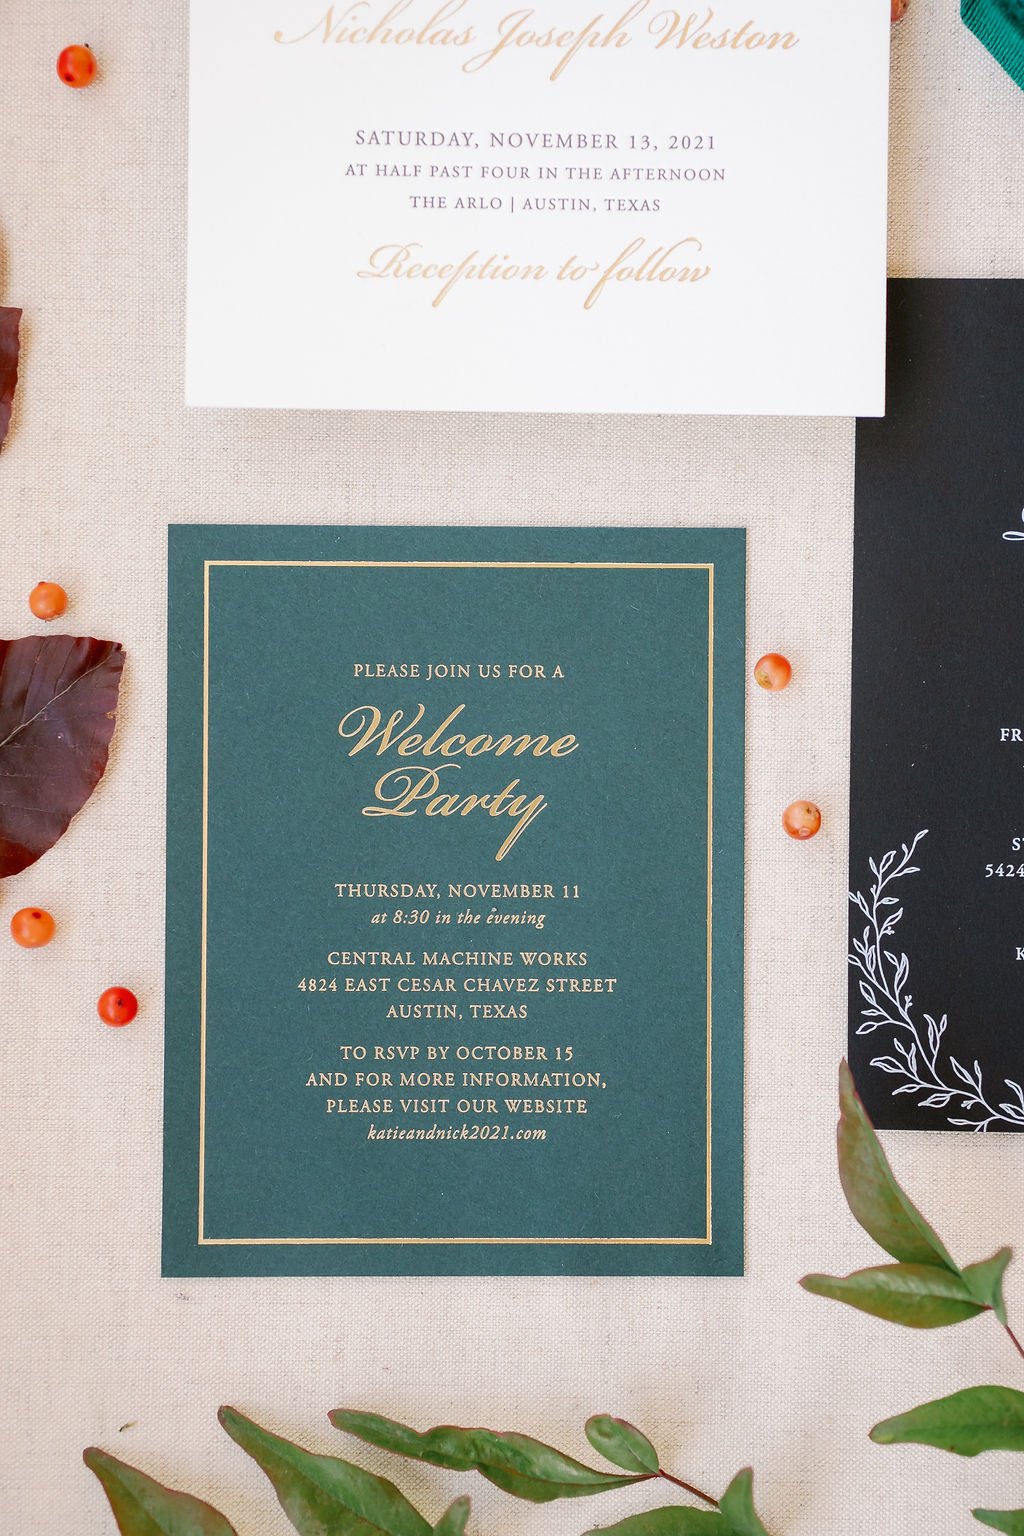 Pink-Champagne-Designs-formal-wedding-invitations